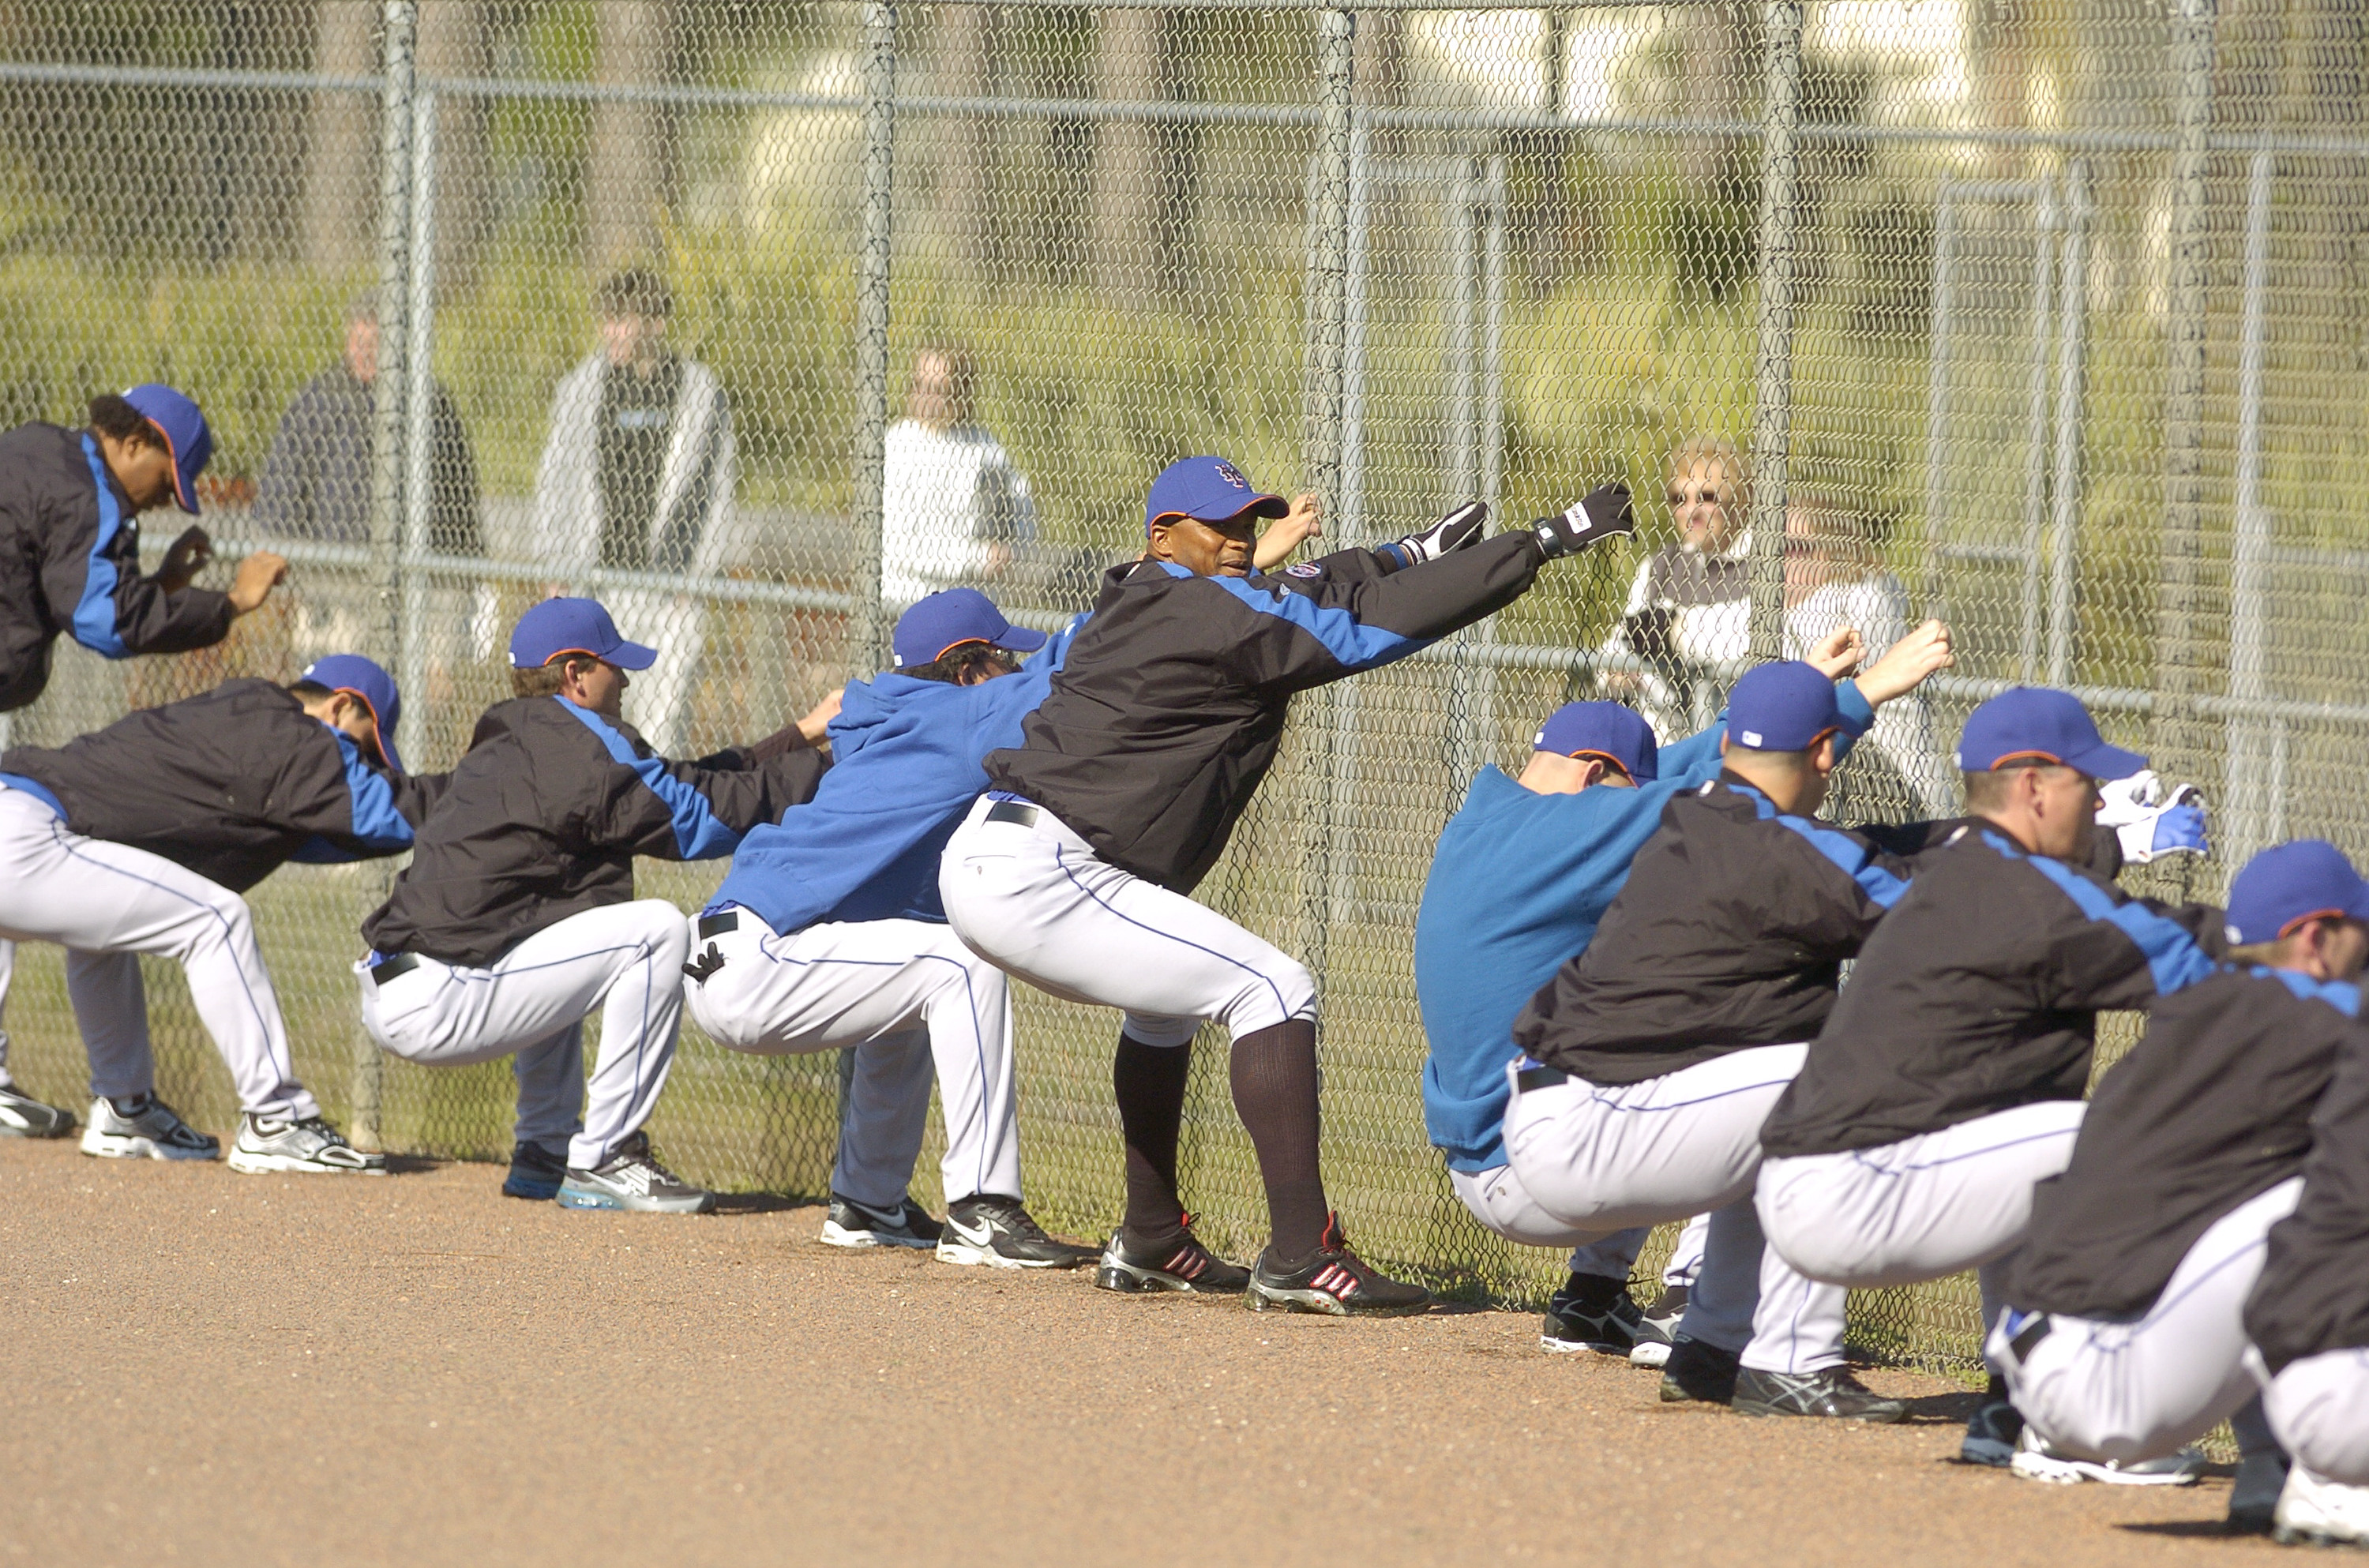 New York Mets’ pitcher Orlando Hernandez (center) stretches